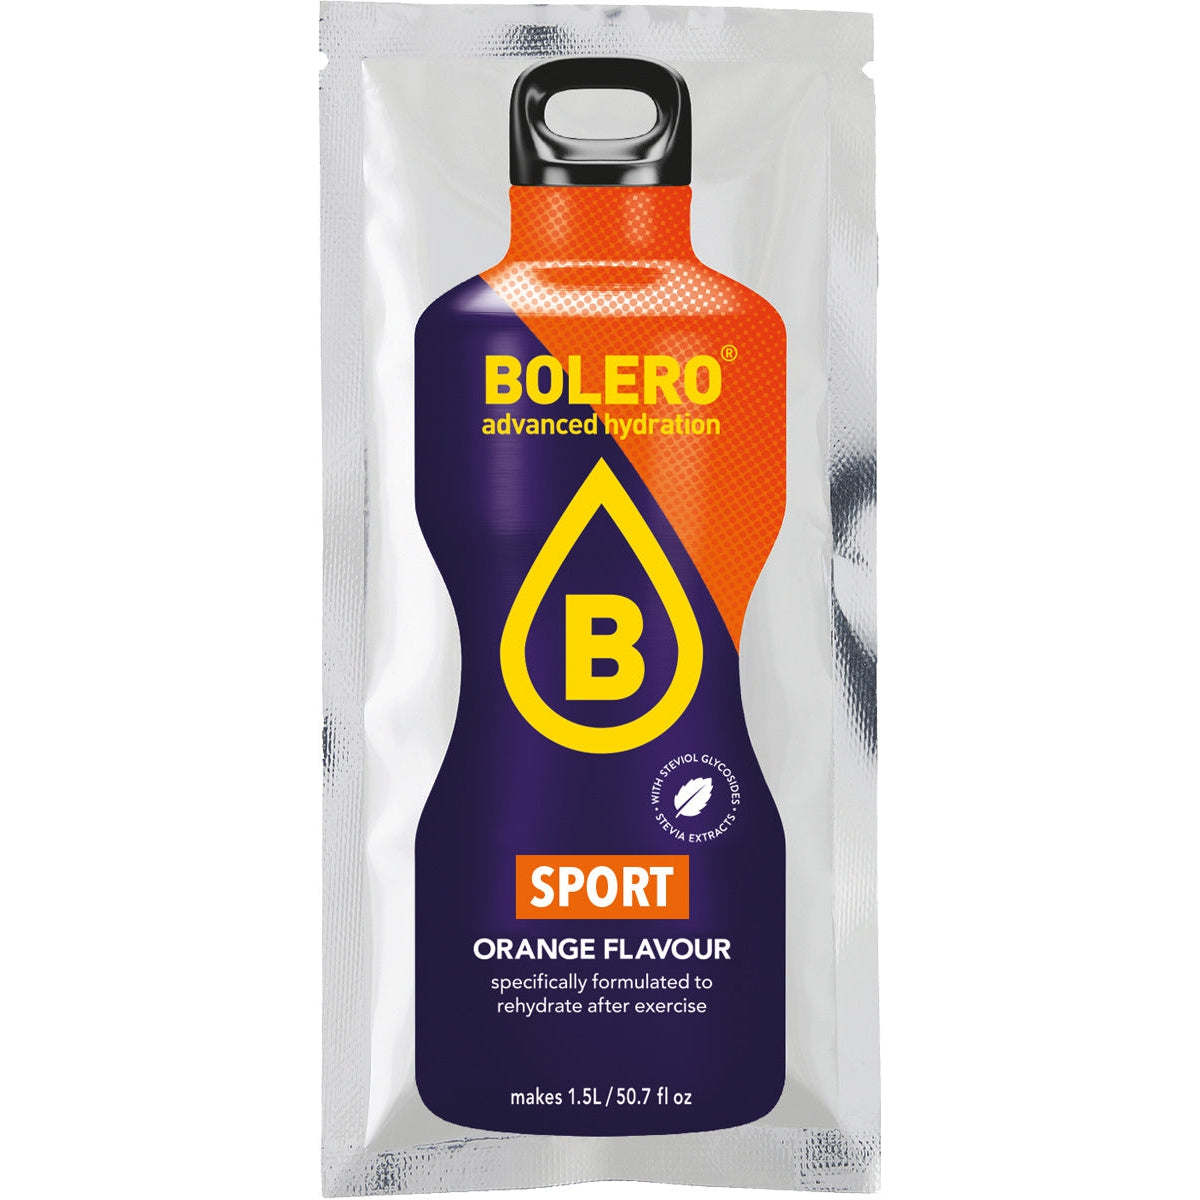 BOLERO - advanced hydration (Sport)